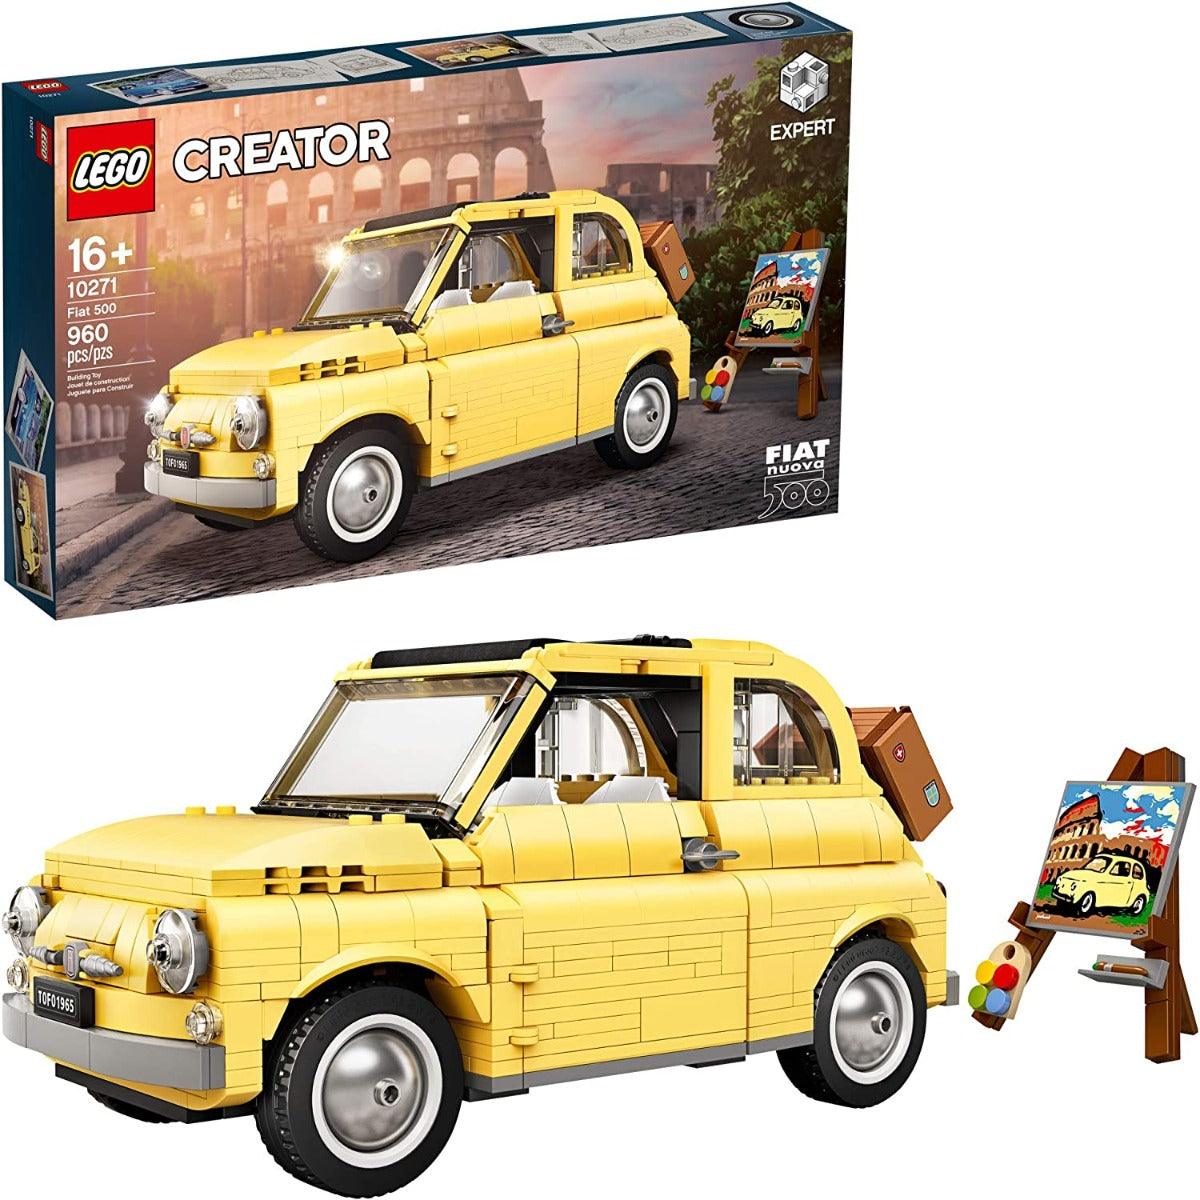 Lego Creator Fiat 500 Building Blocks For Ages 16+